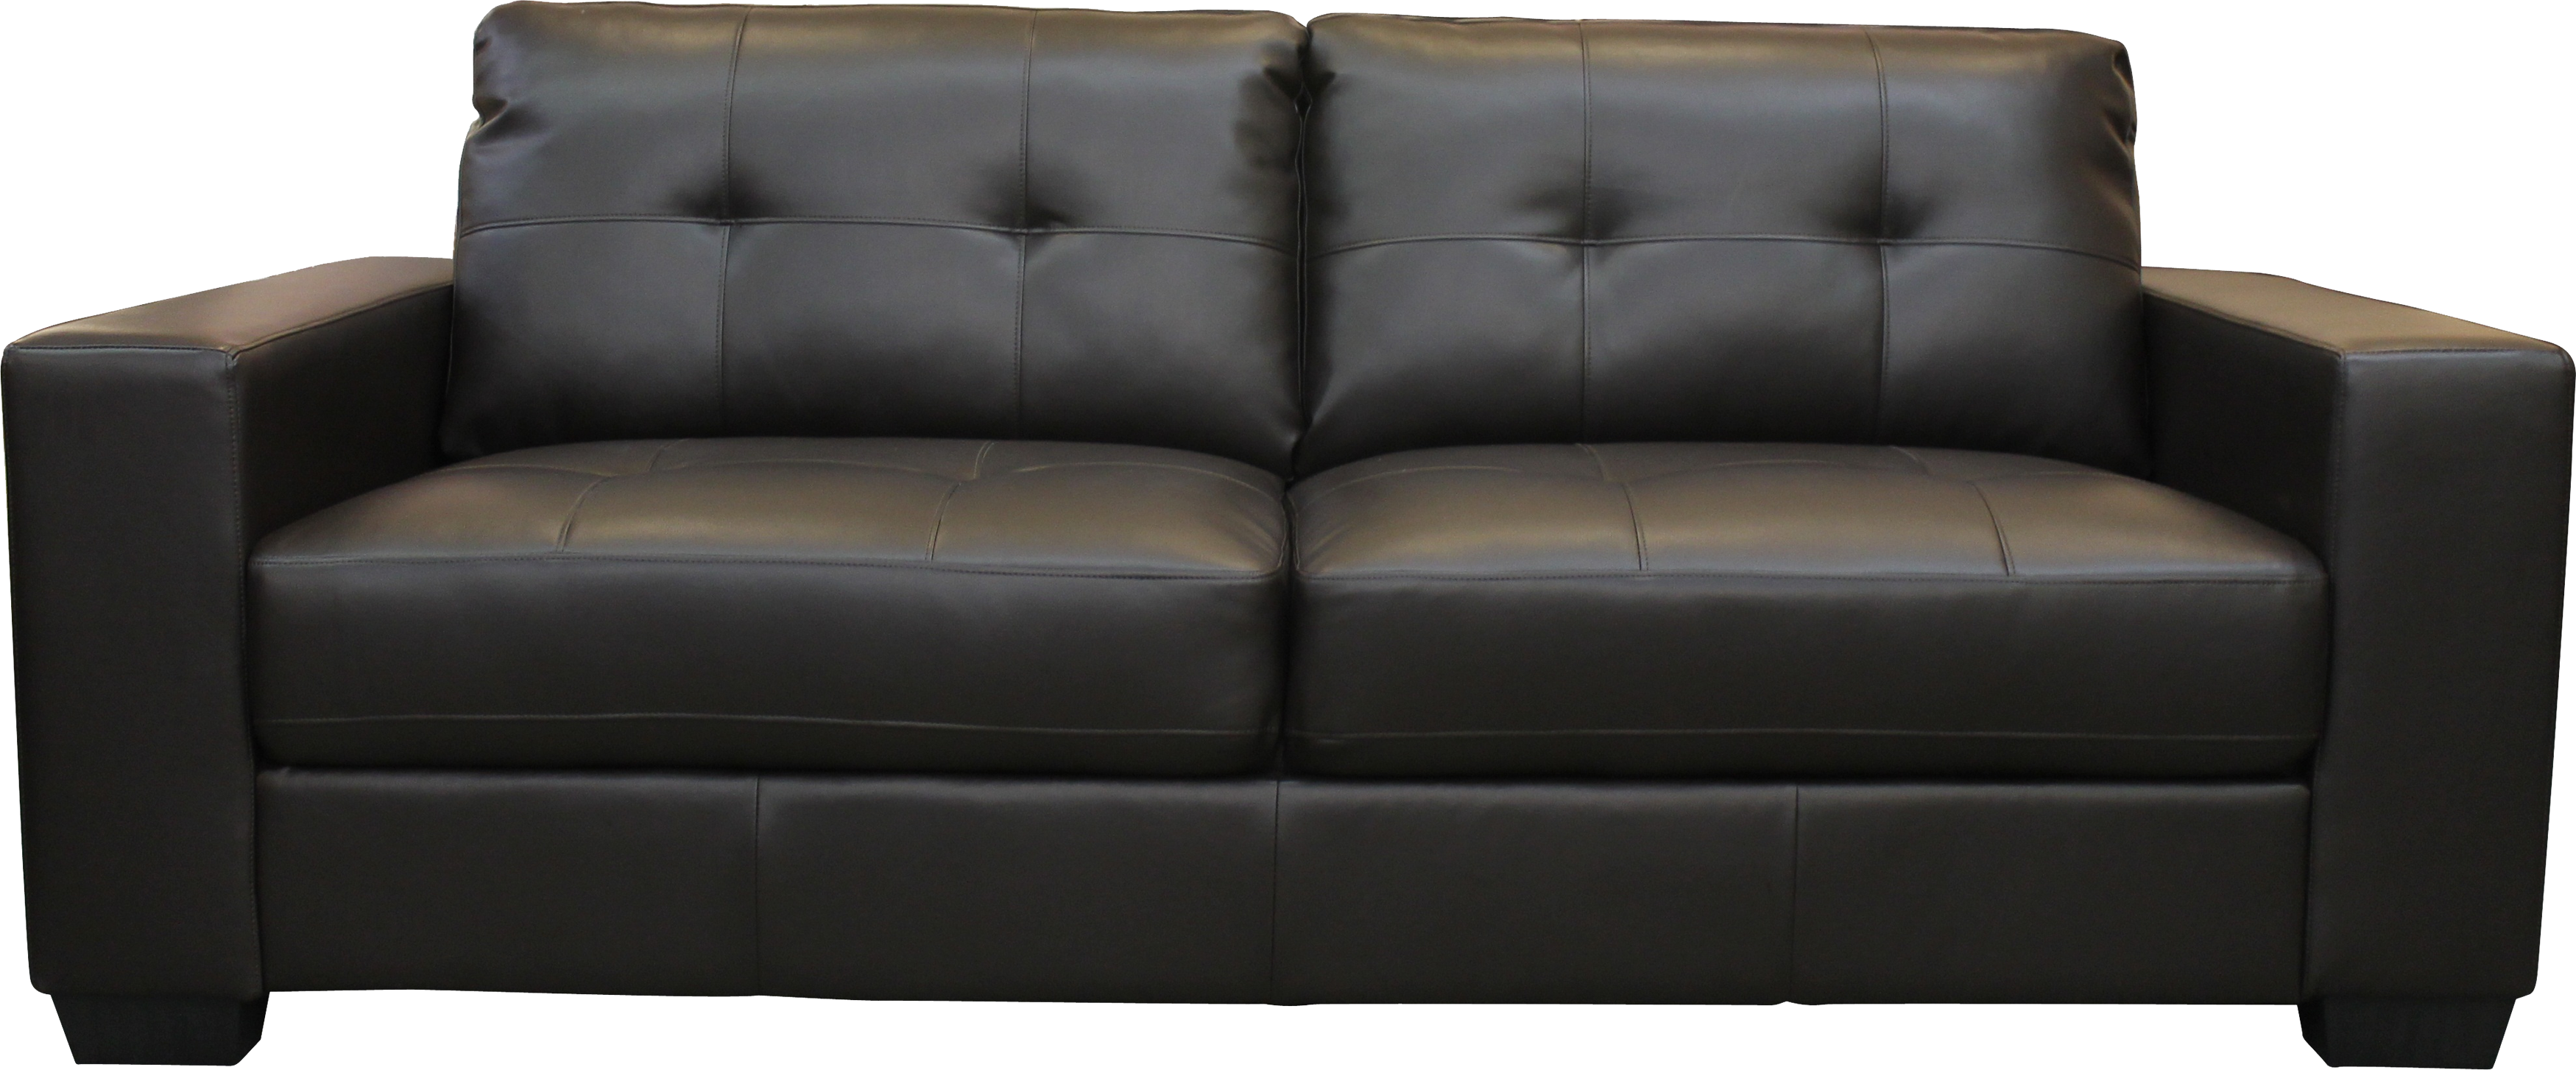 Green sofa PNG Transparent im